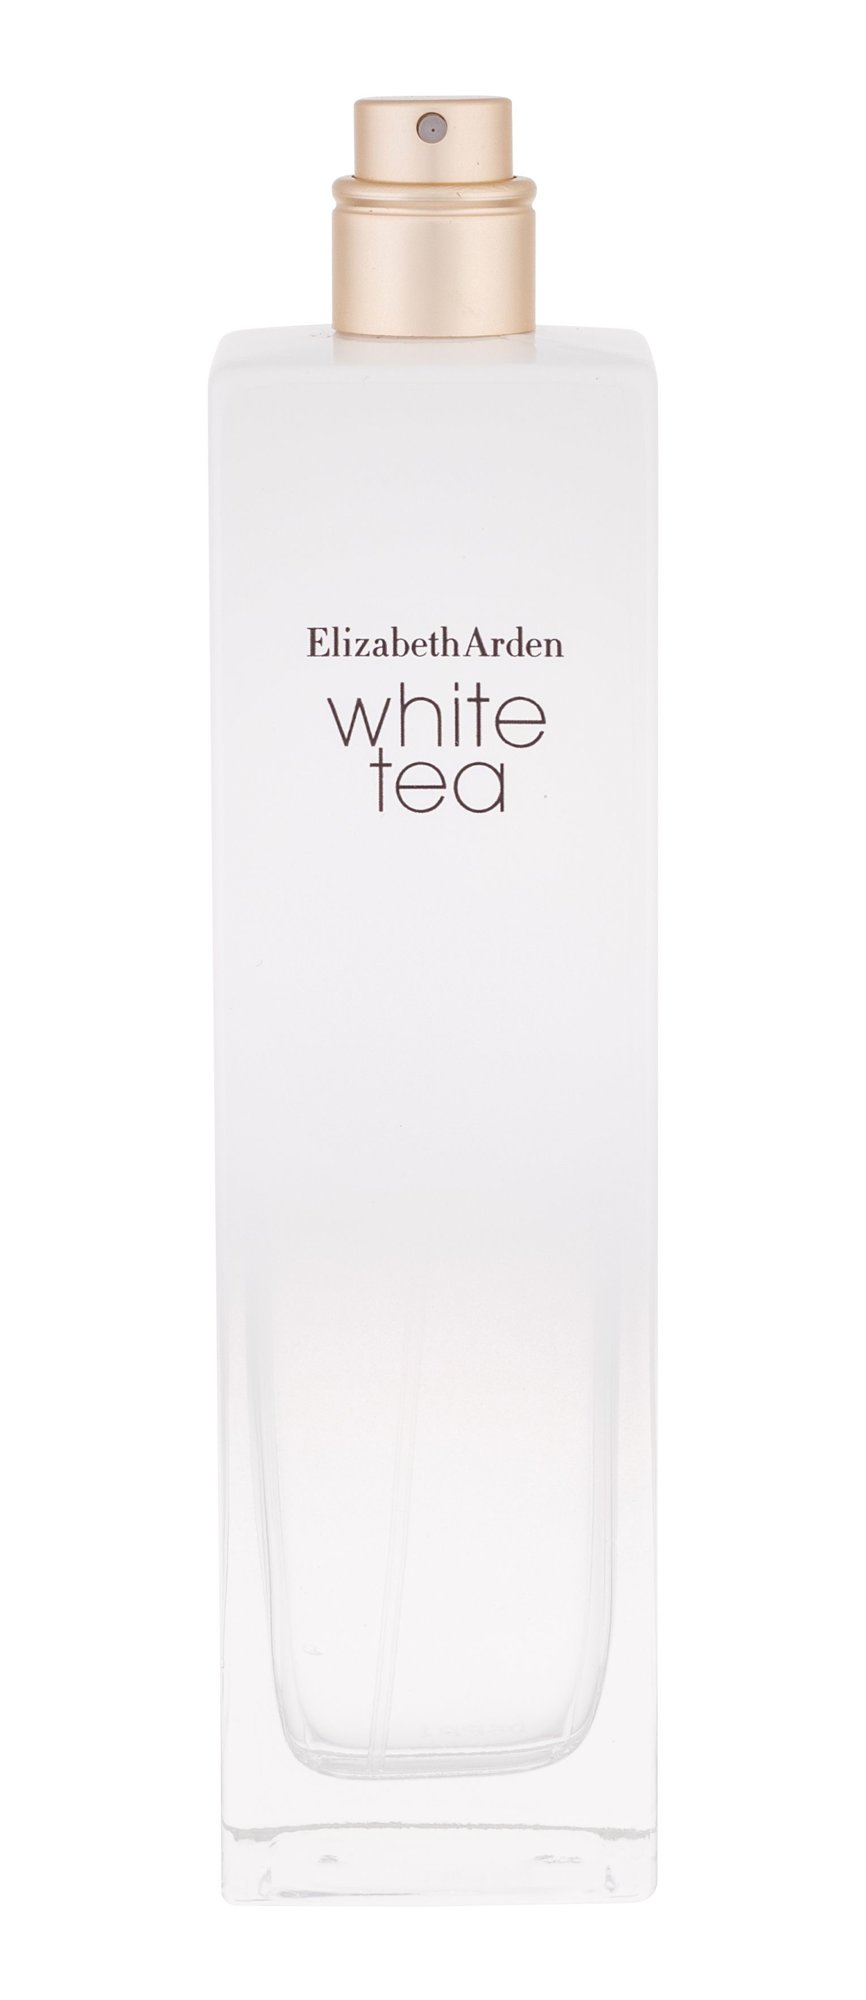 Elizabeth Arden White Tea, Toaletní voda 100ml, Tester